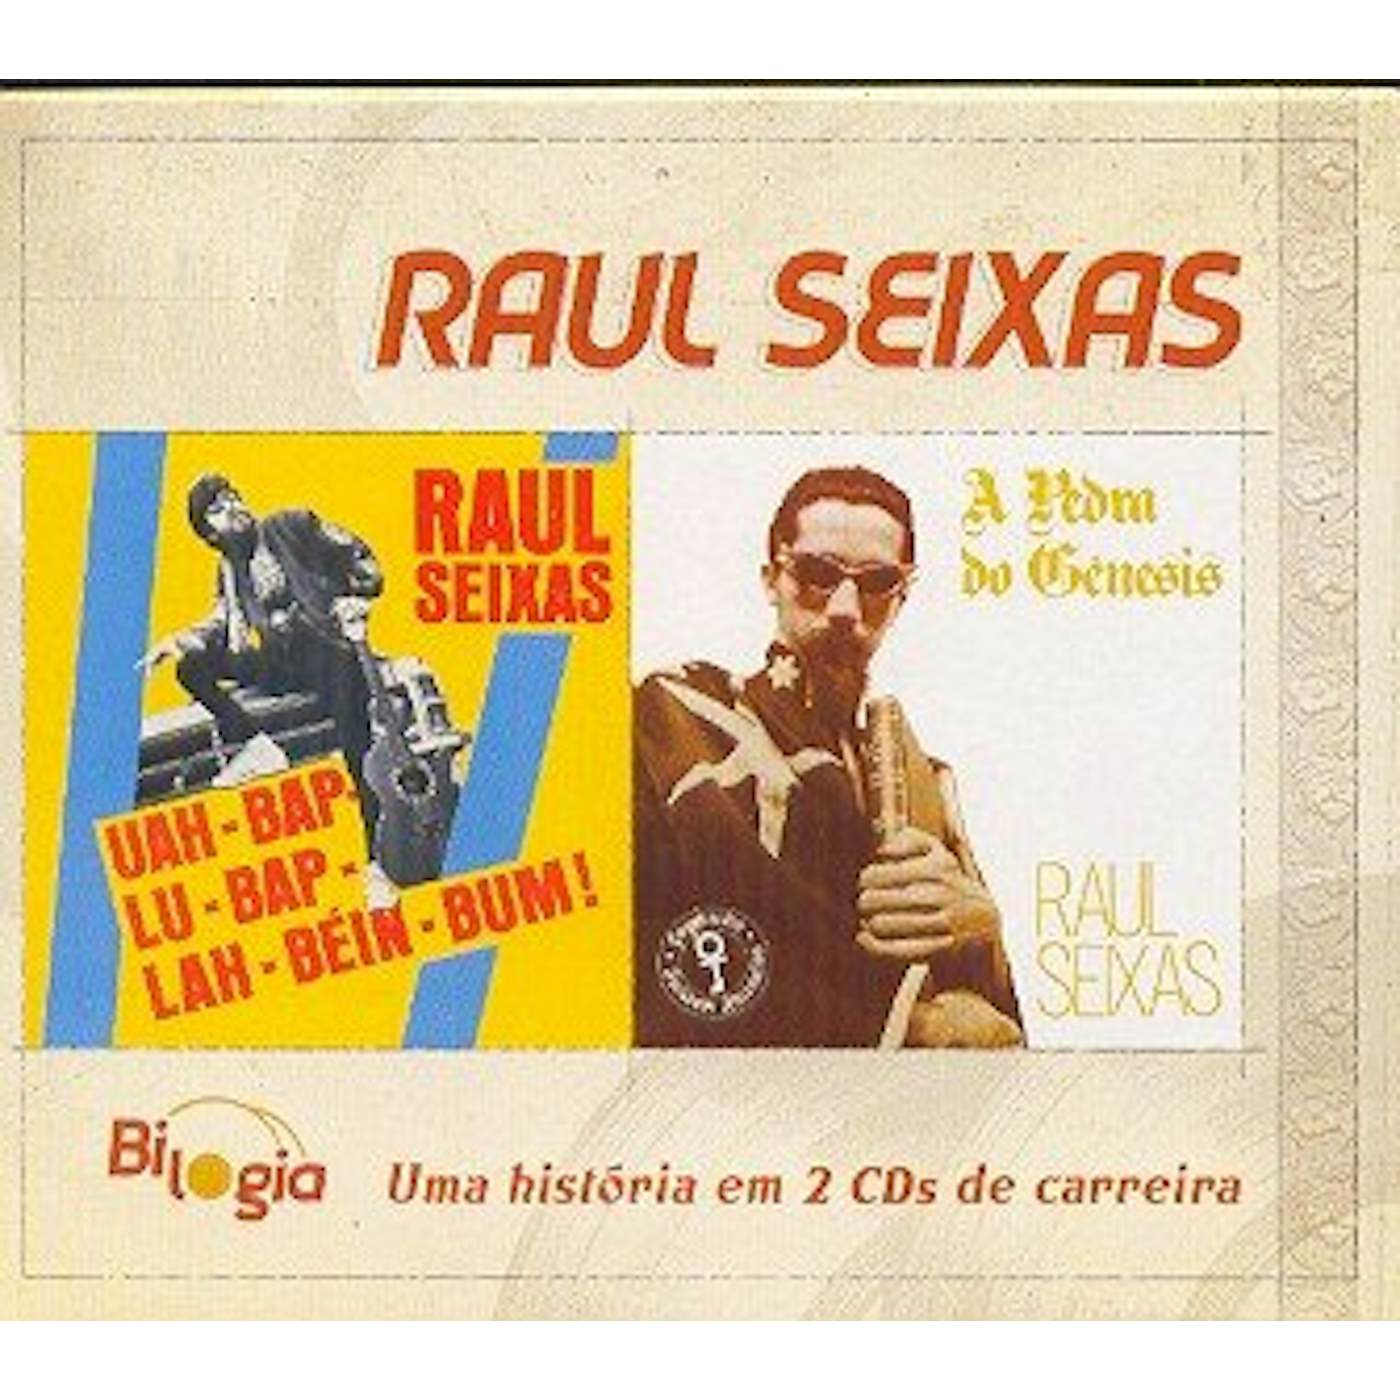 Raul Seixas UAH-BAP-LU-BAP-LAH-BEIN-BUM / PEDRA DO GENESIS CD